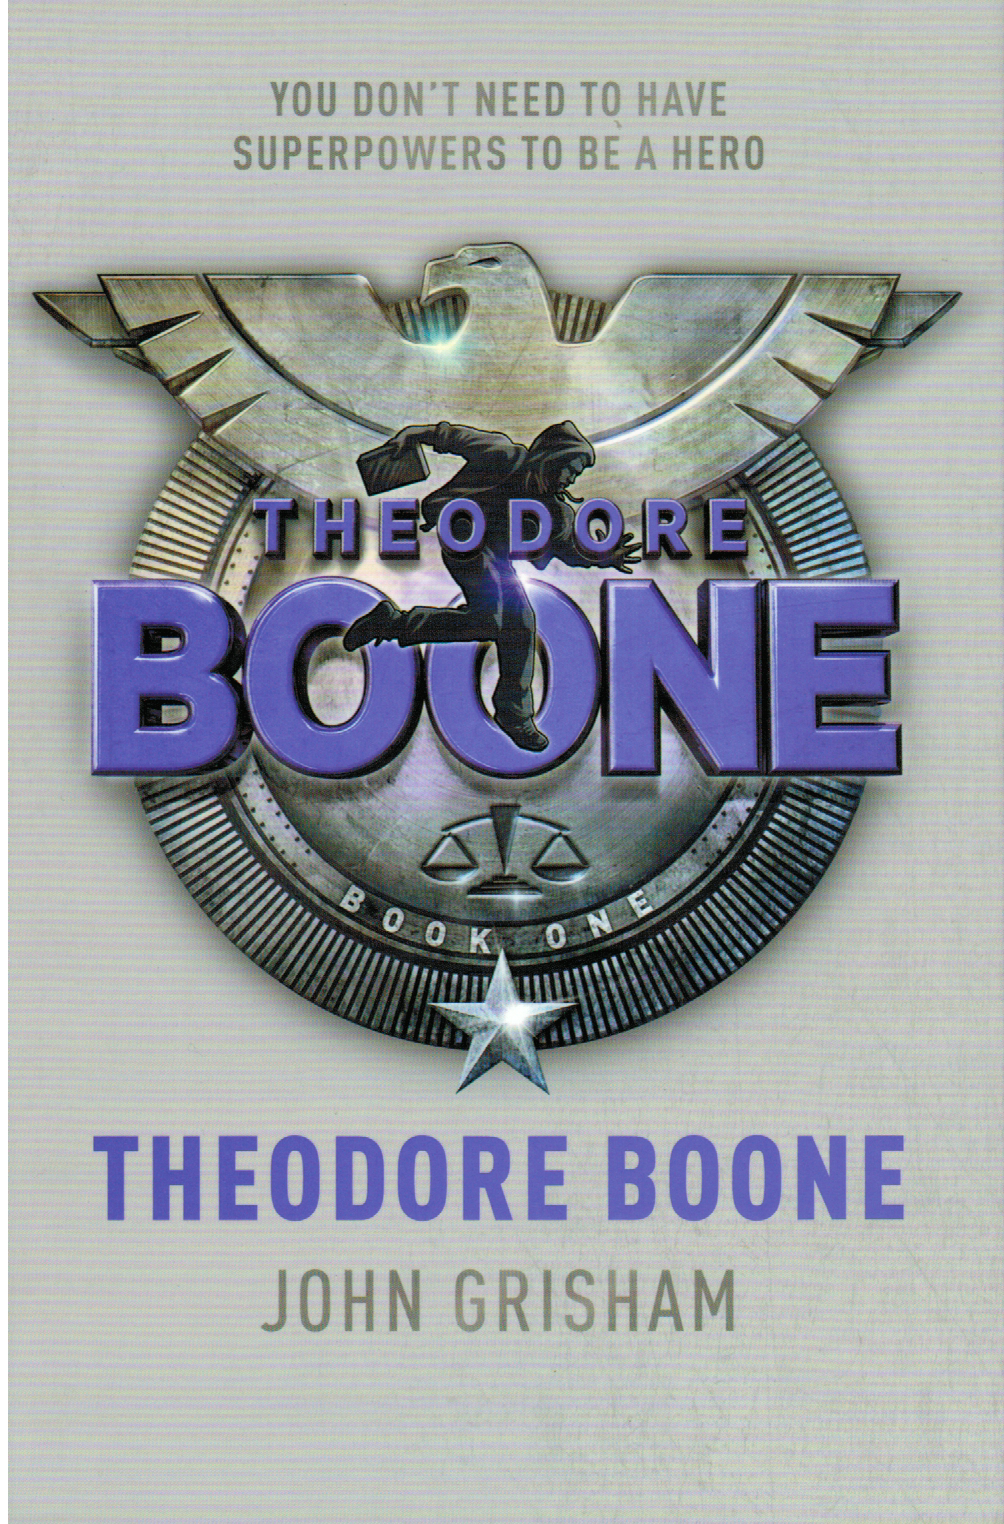 THEODORE BOONE